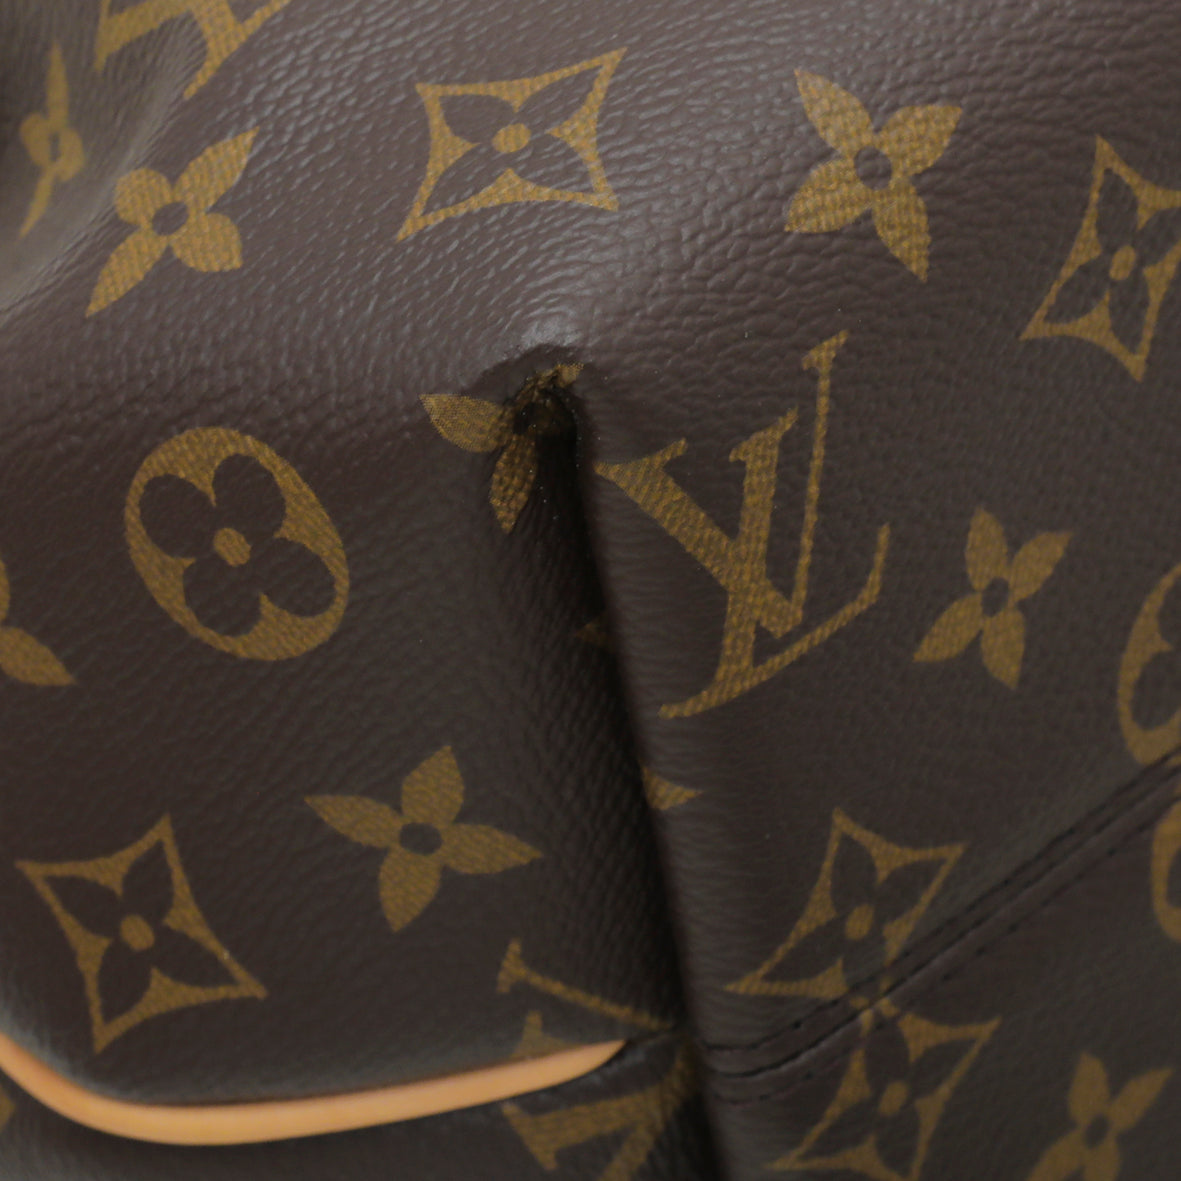 Louis Vuitton Turenne Handbag 362671